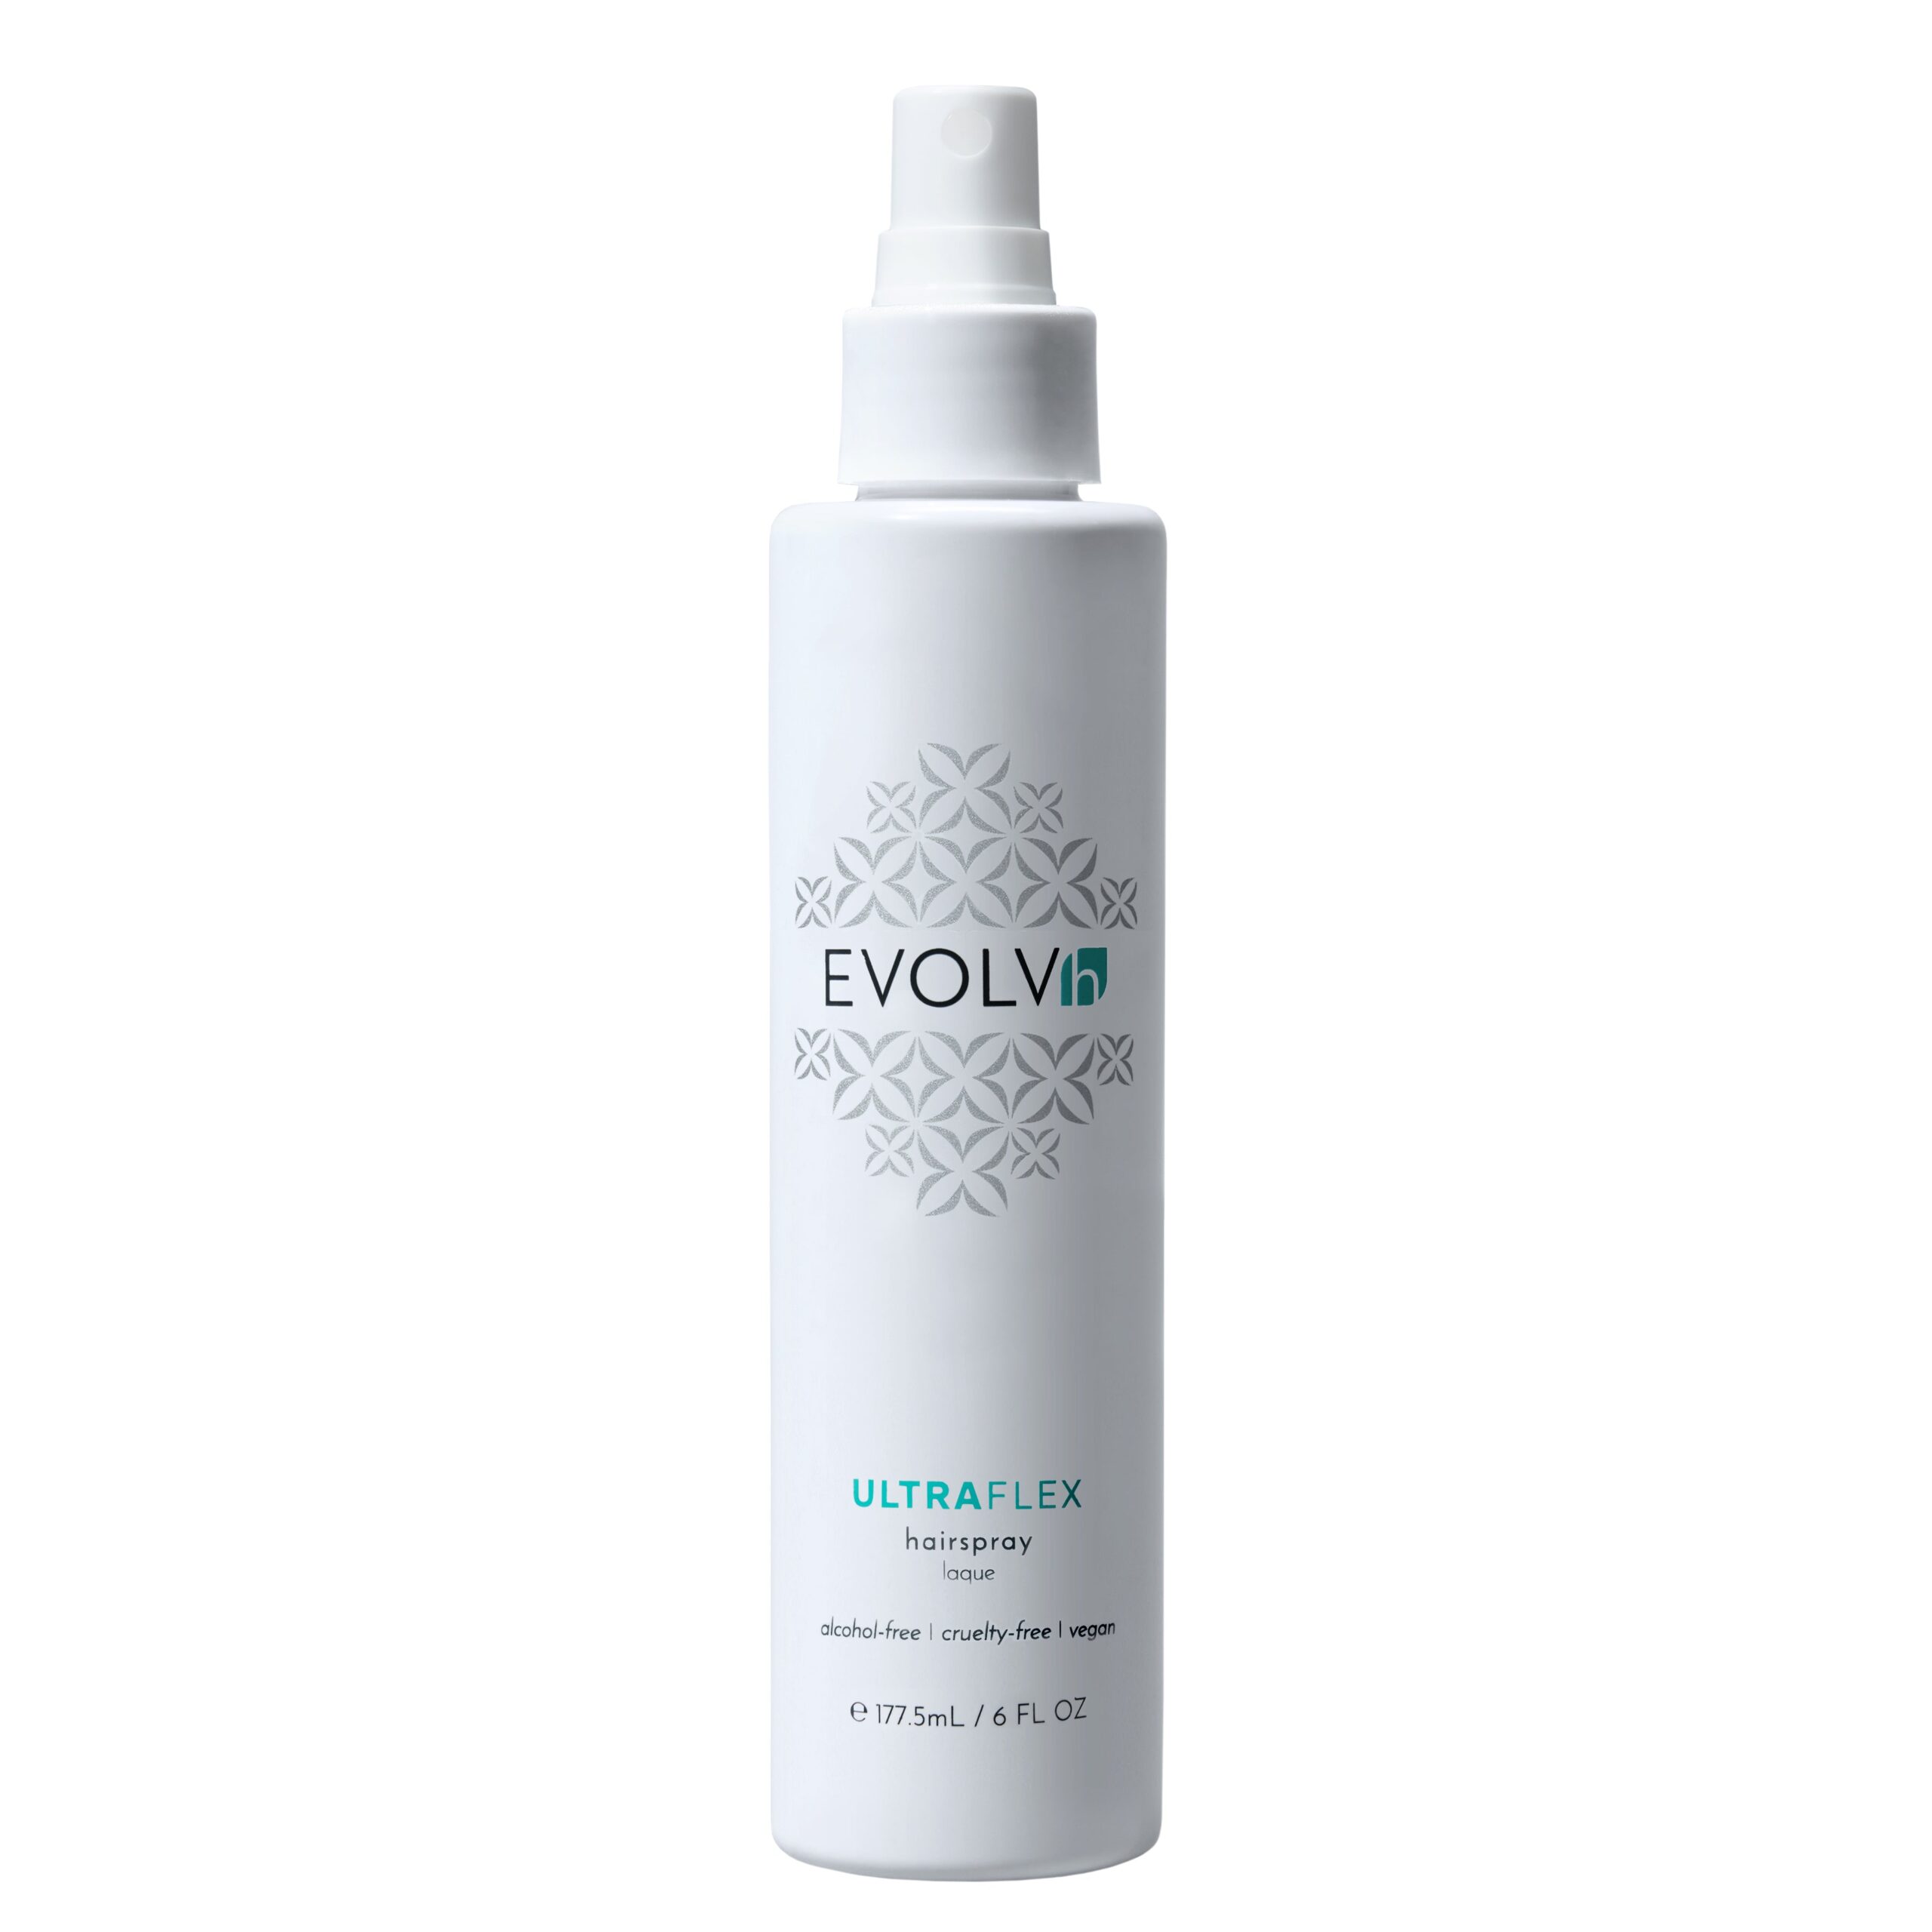 EVOLVh Ultraflex Hairspray